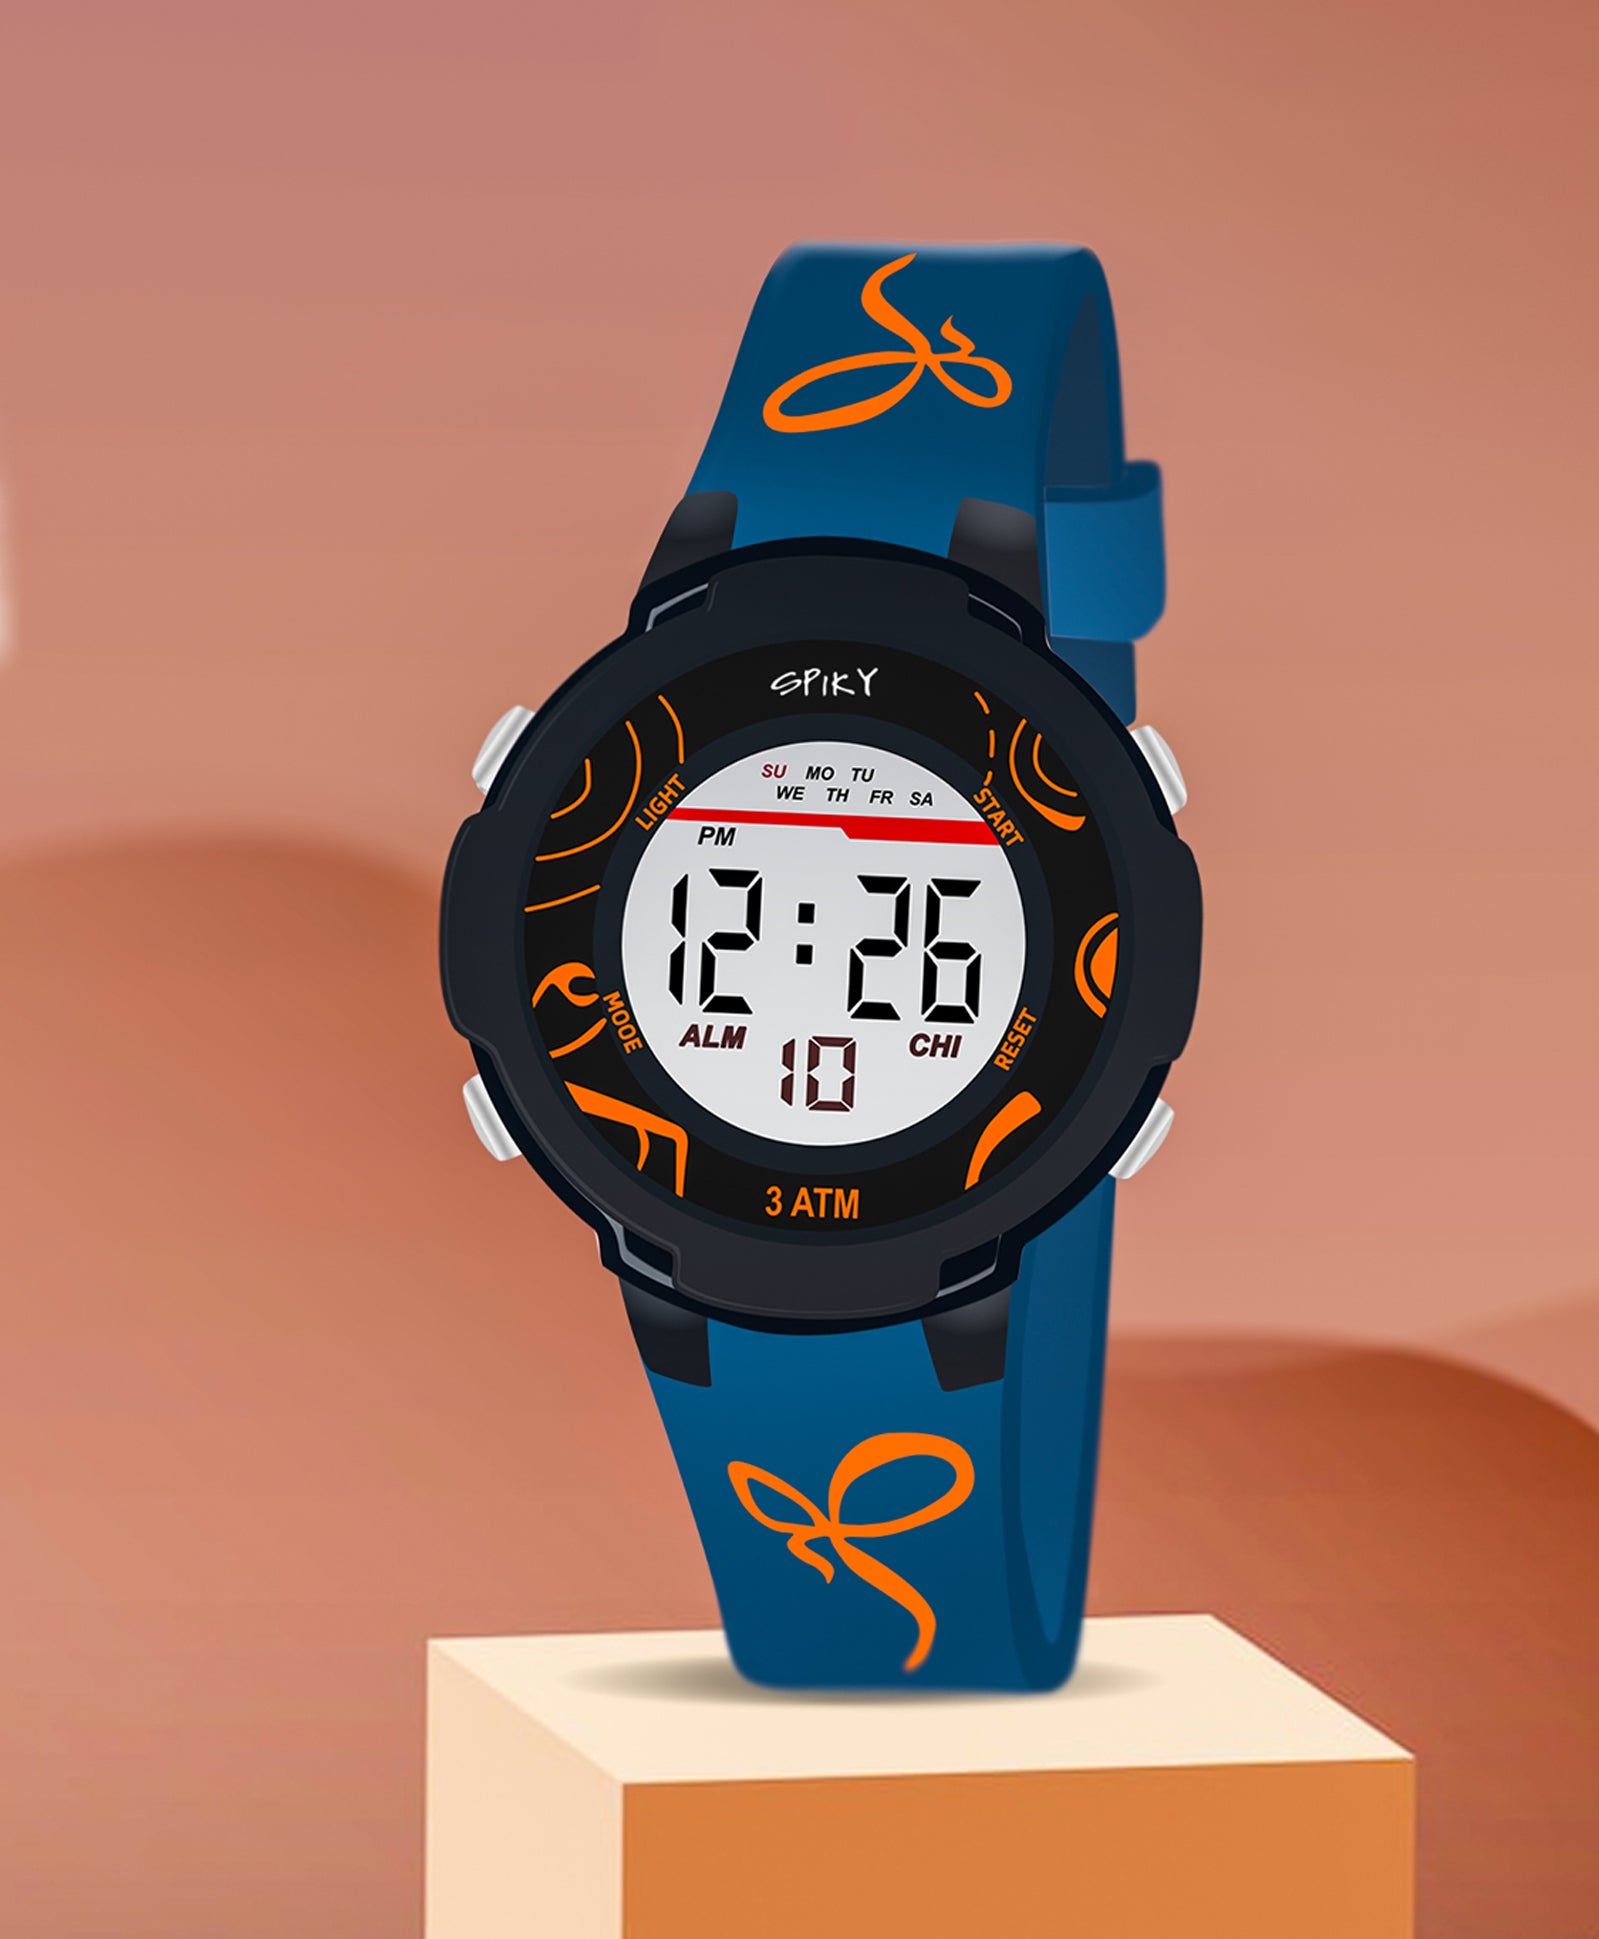 Spiky Sports Printed Strap Digital Watch - Blue